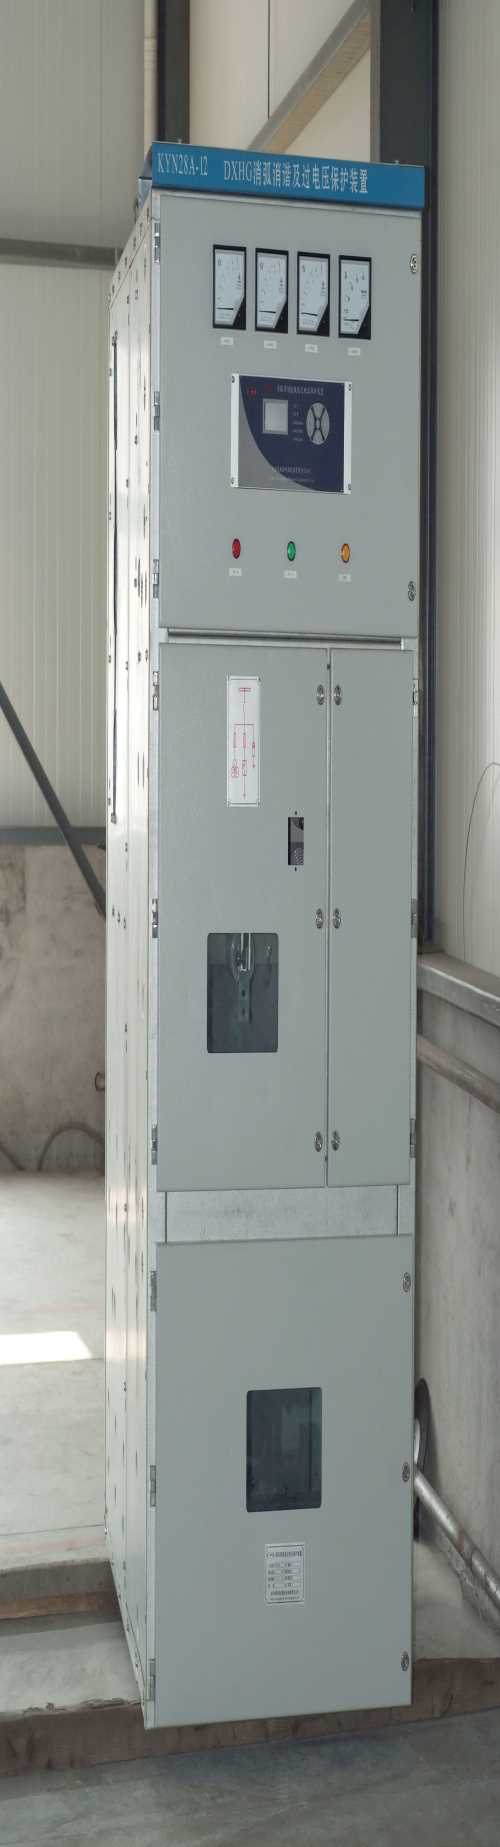 DXHG–Ⅳ消谐柜功能 抑制过电压优能柜厂家